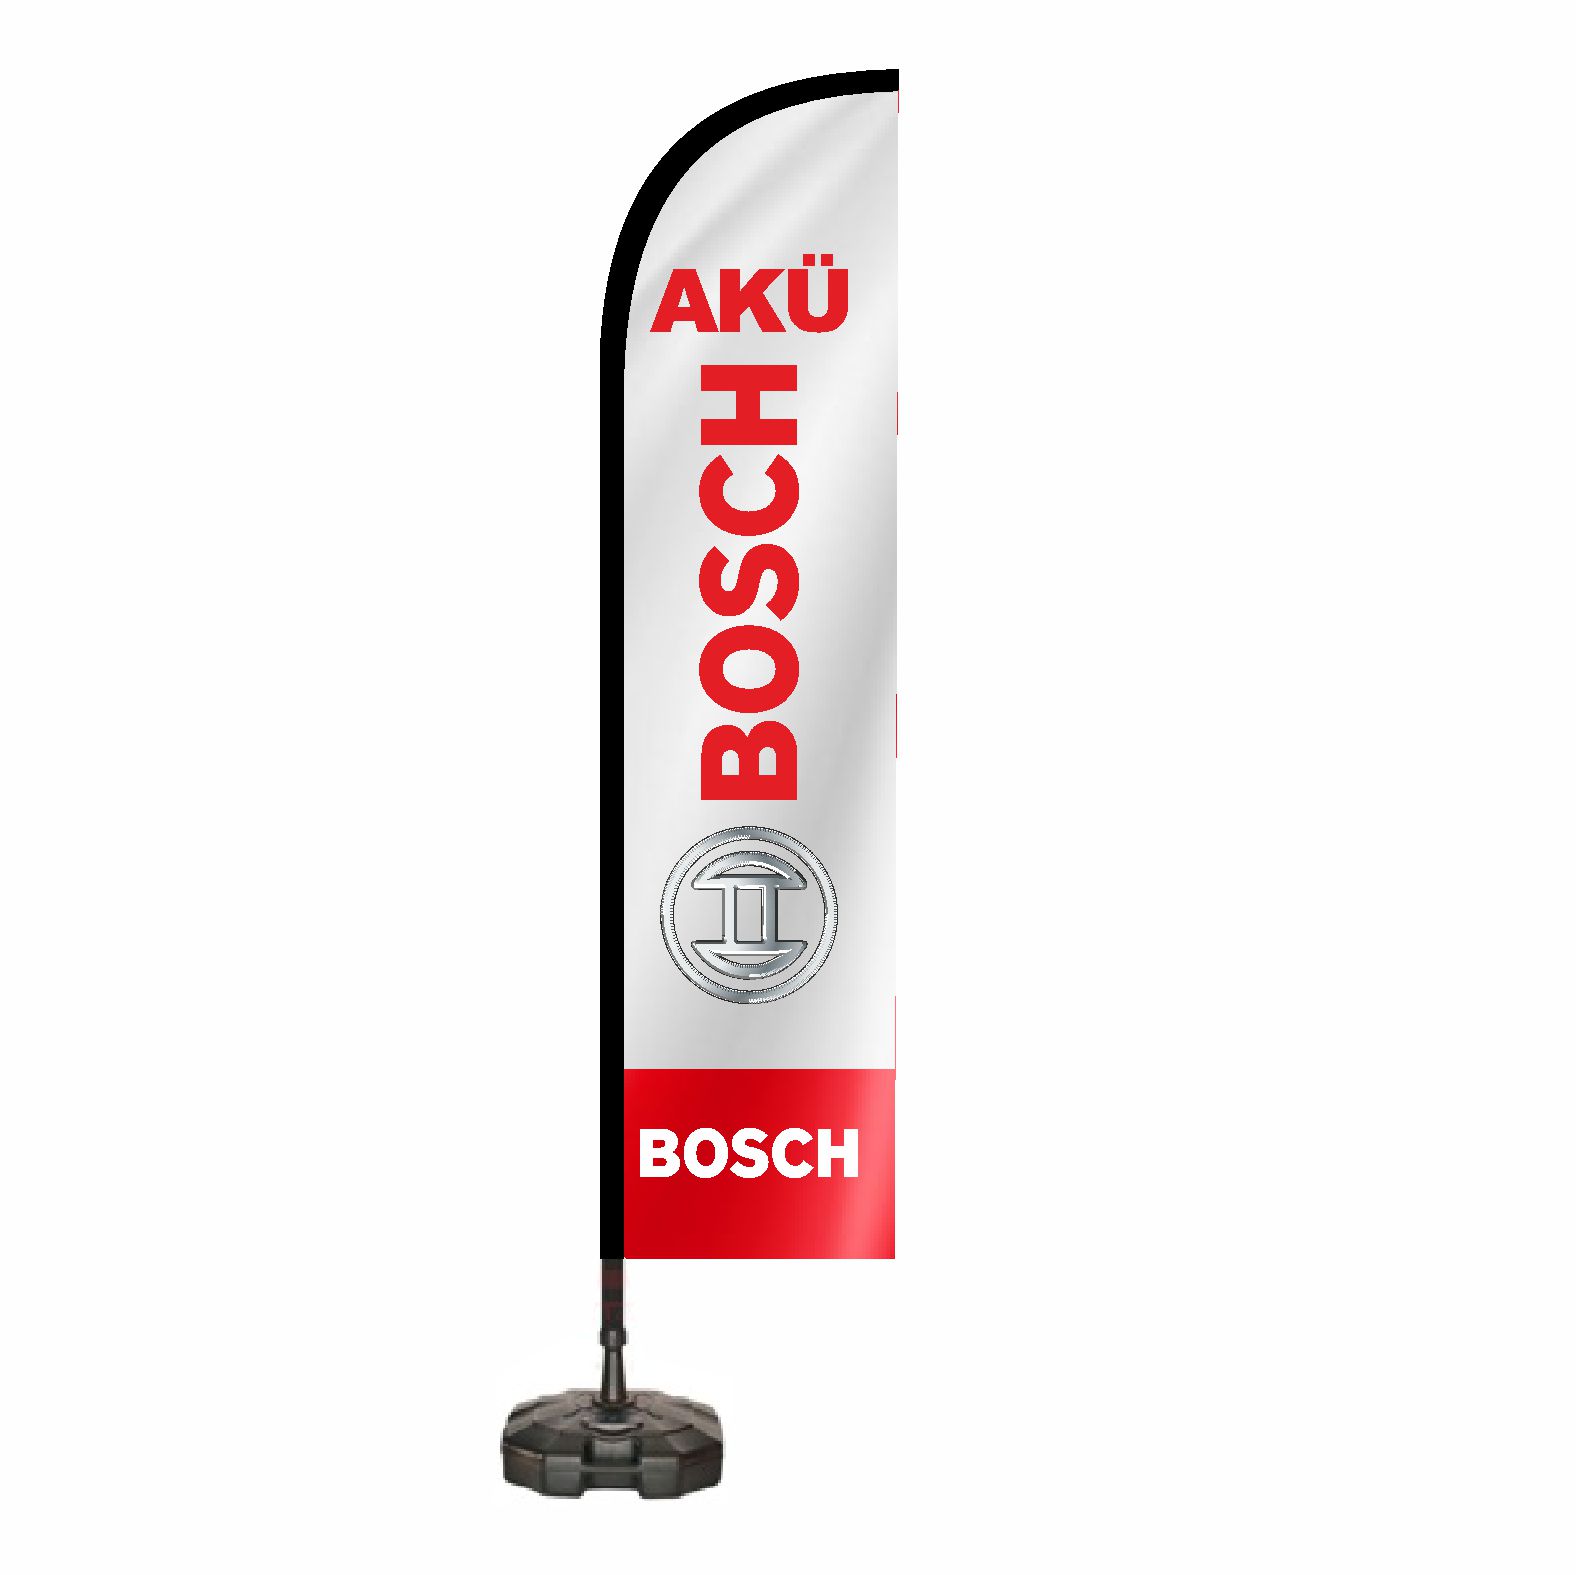 Bosch Ak Sokak Bayraklar